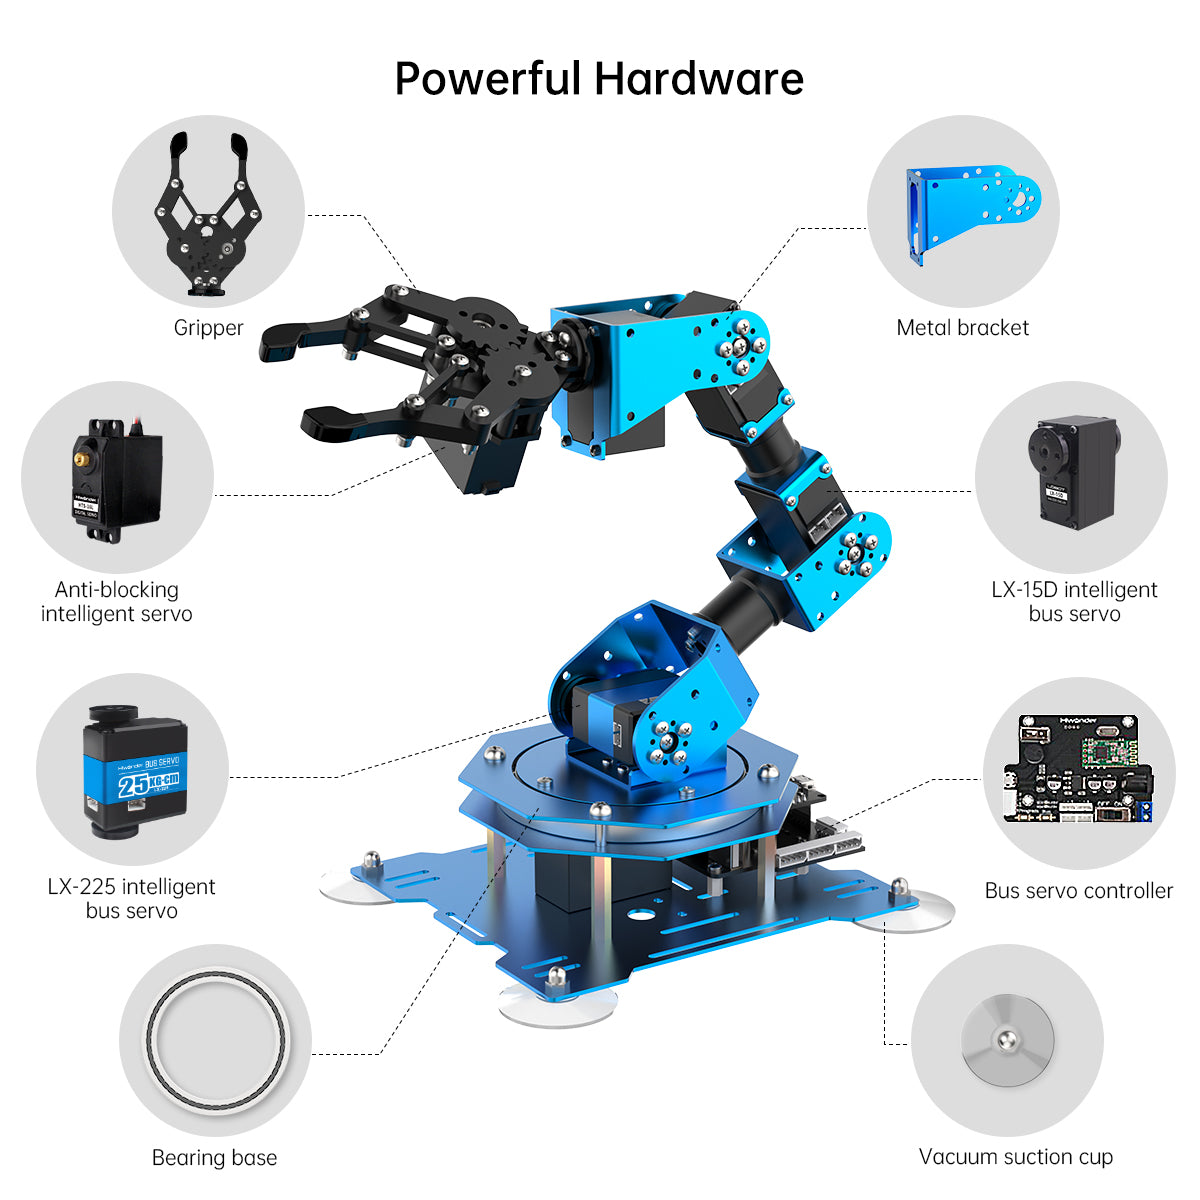 xArm 1S: Hiwonder Intelligent Bus Servo Robotic Arm for Programming